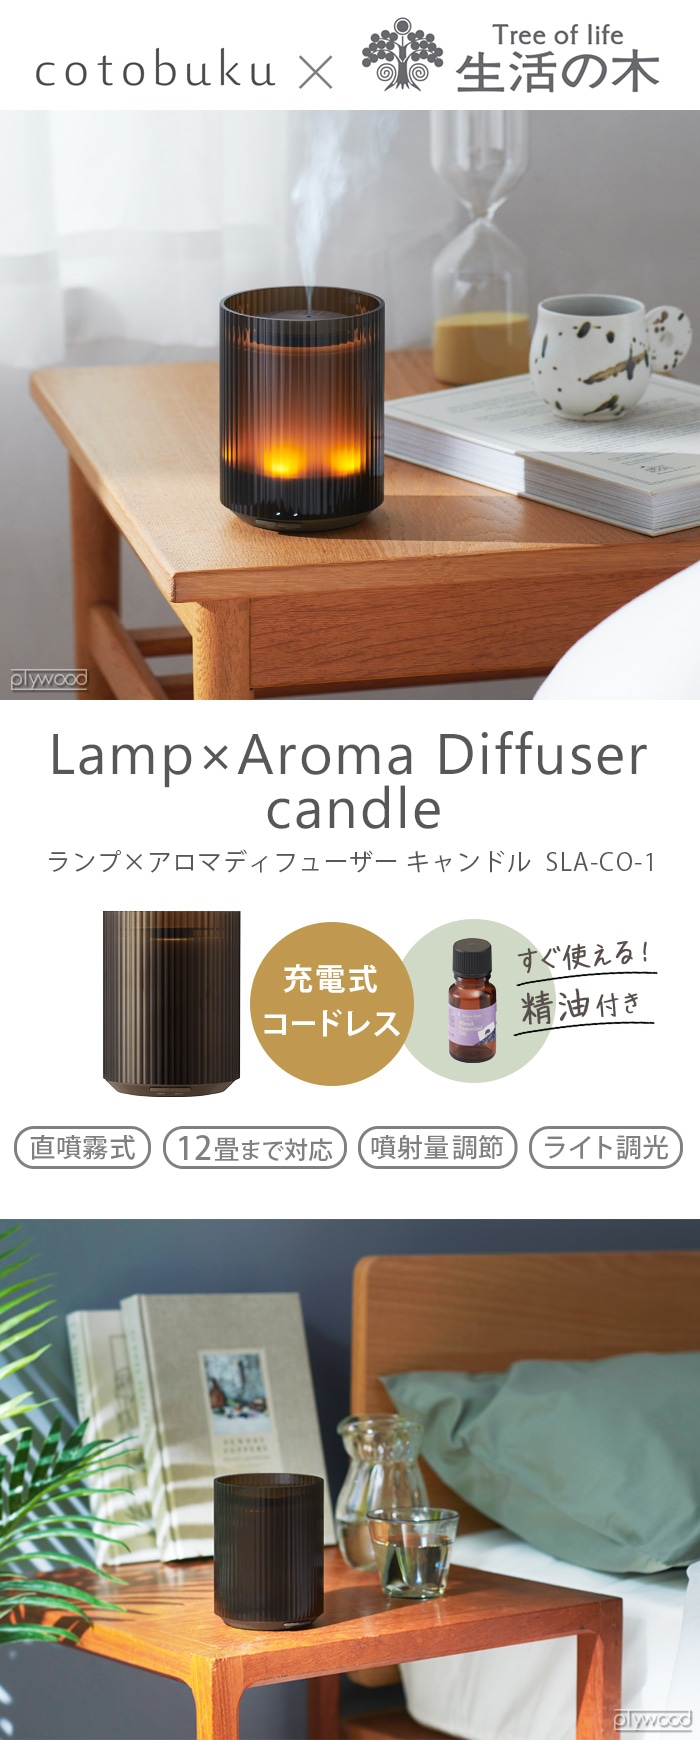 cotobuku×生活の木 Lamp×Aroma Diffuser candle [SLA-CO-1] コトブク ...